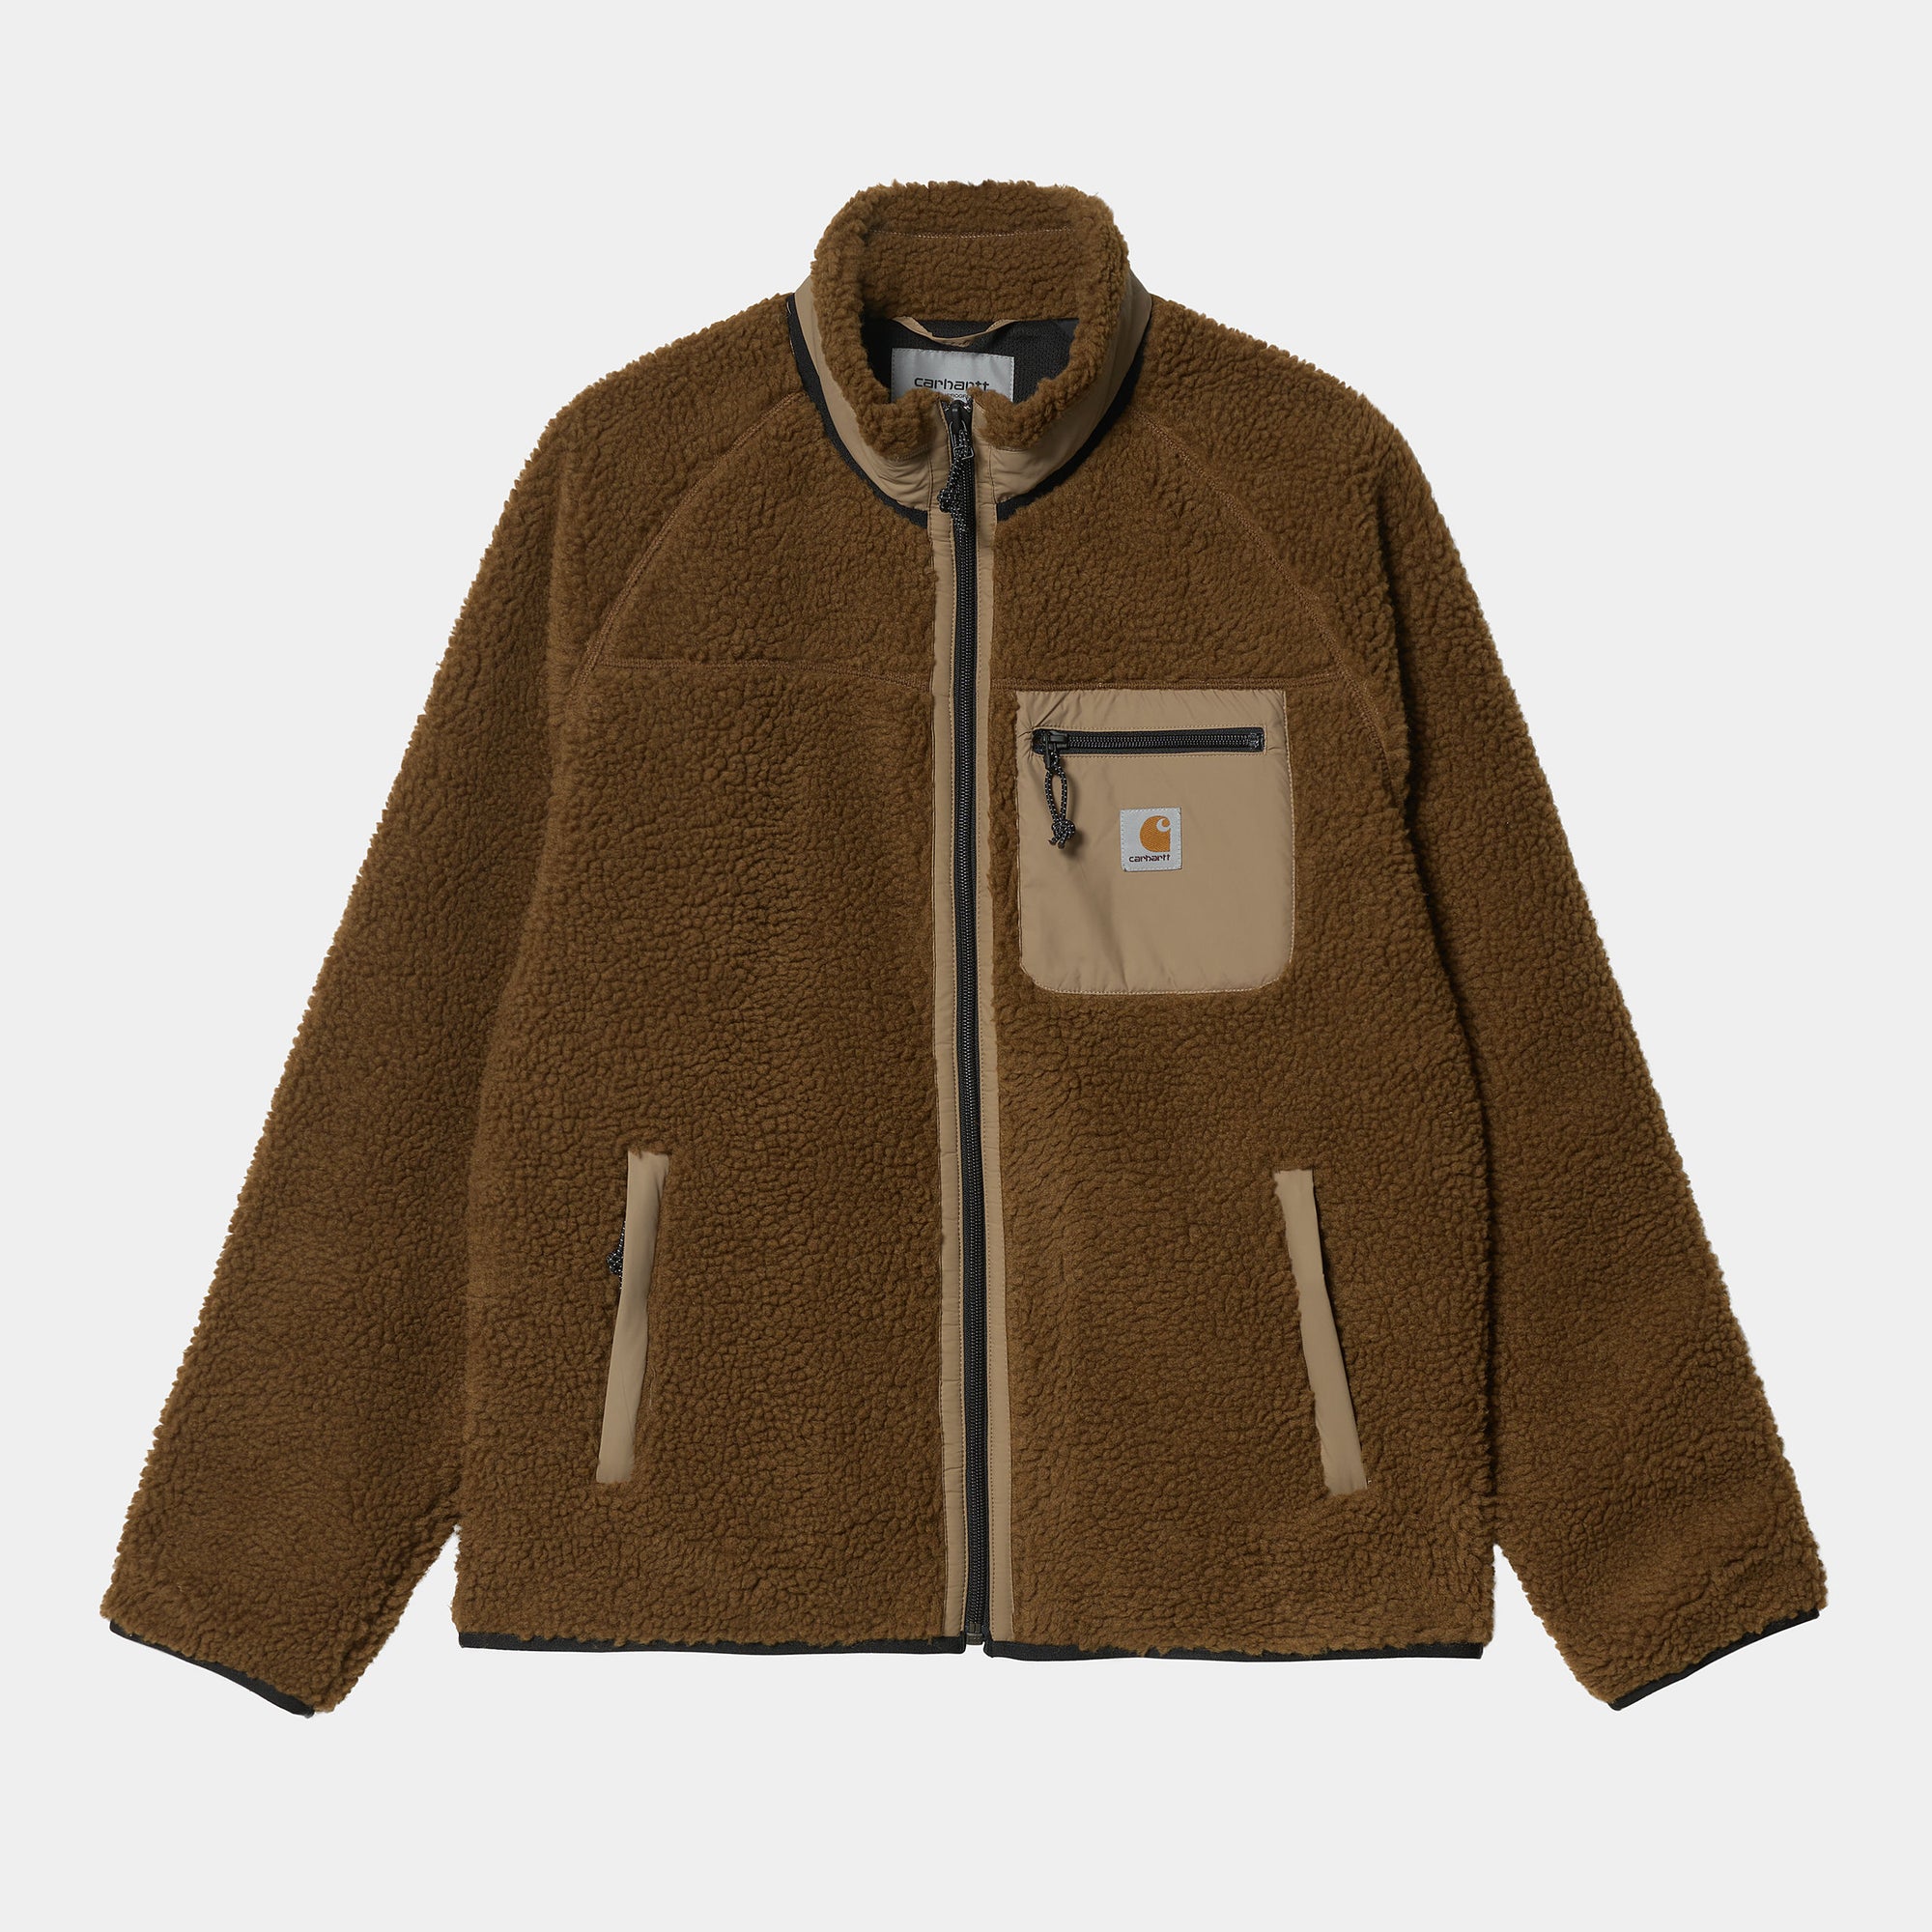 Carhartt WIP - Prentis Liner Fleece Jacket - Tawny / Leather